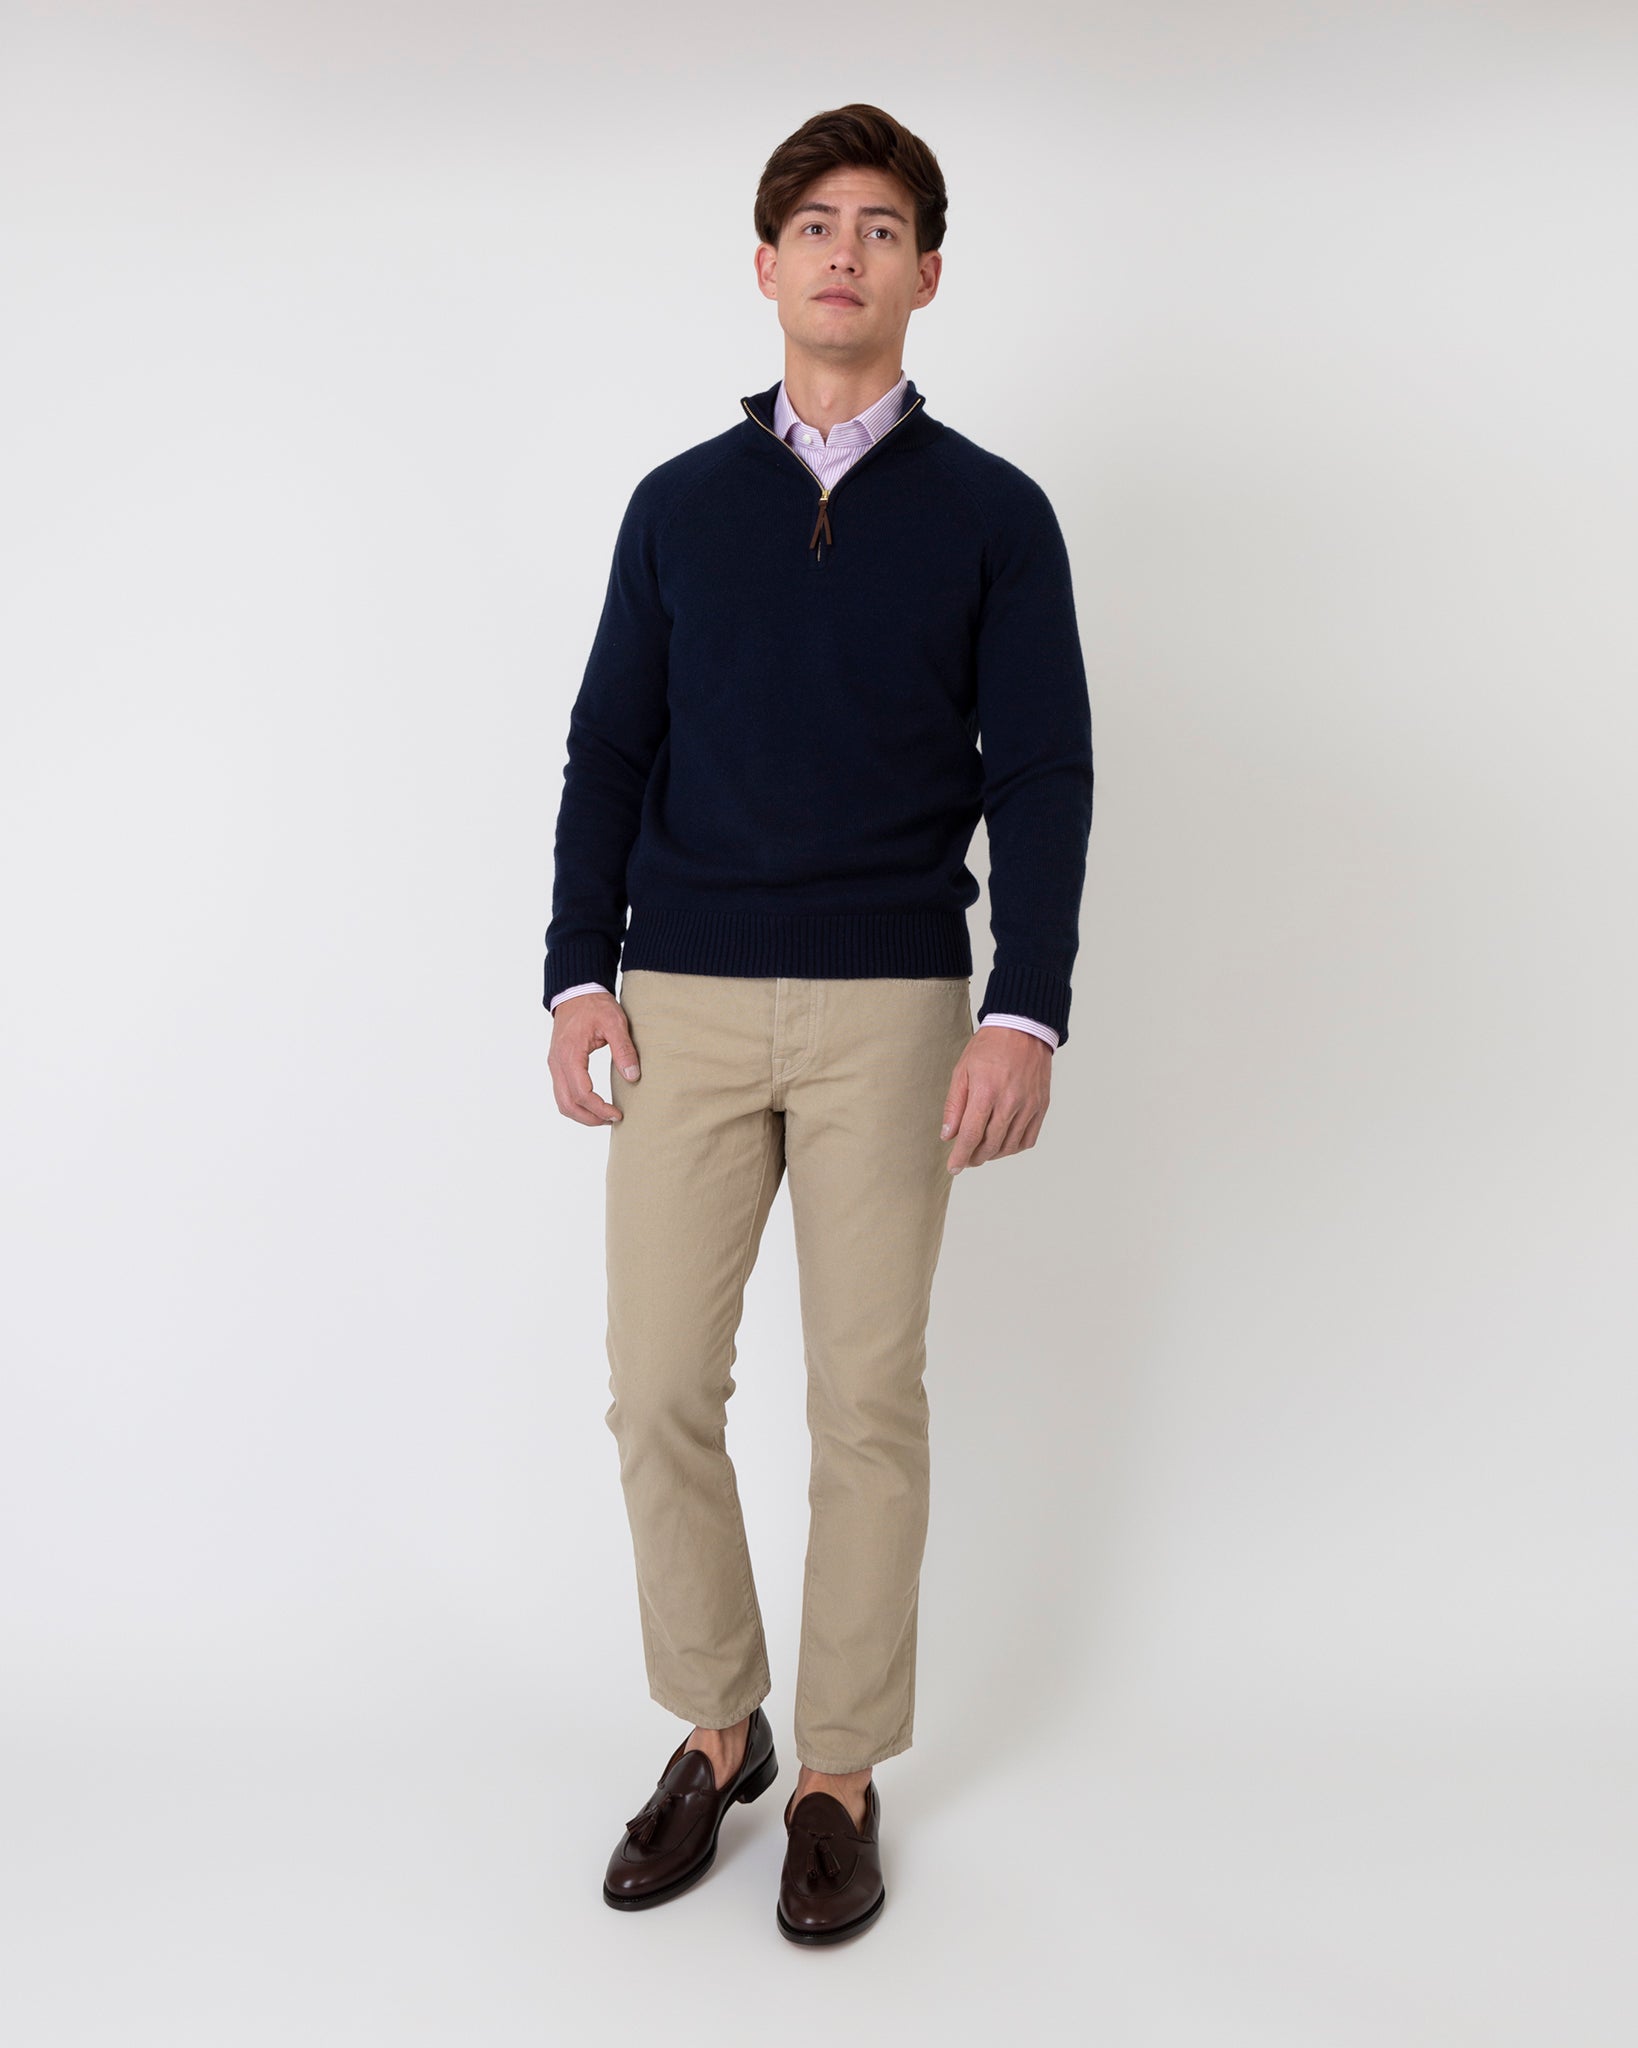 Half-Zip Sweater in Navy Cashmere